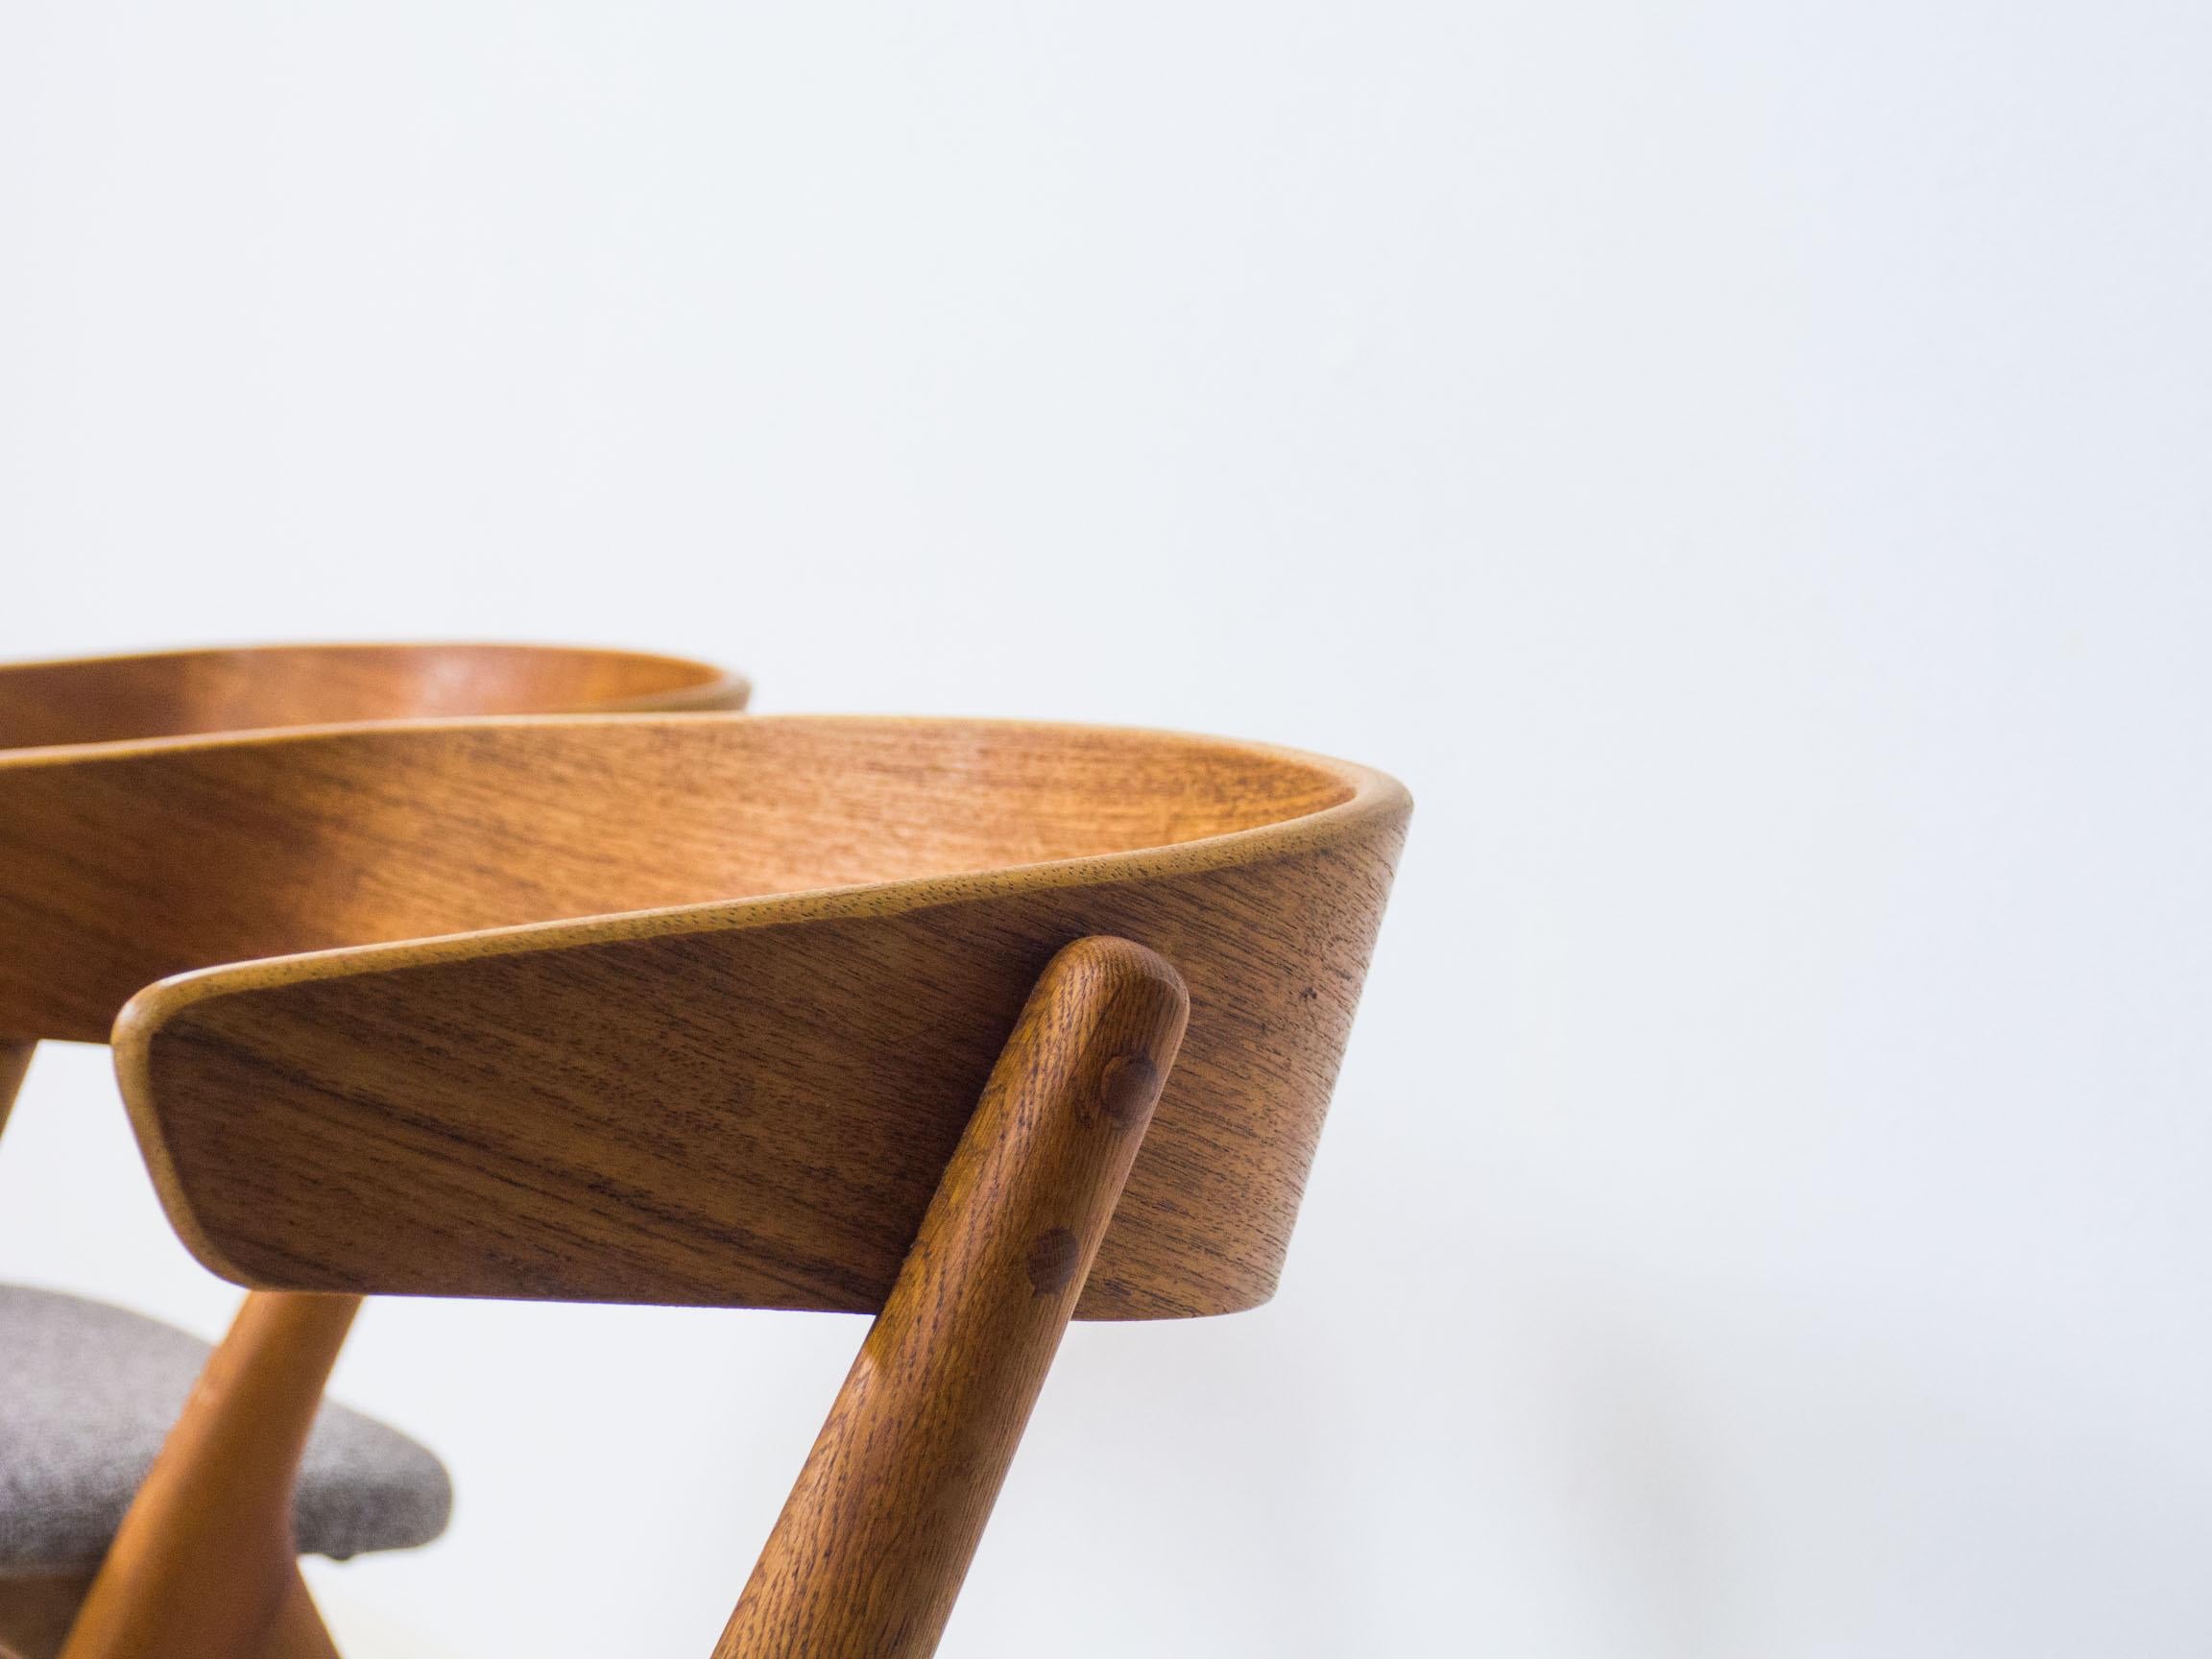 Sibast Møbler model ‘no. 9’ teak & oak dining chairs – Helge Sibast  1